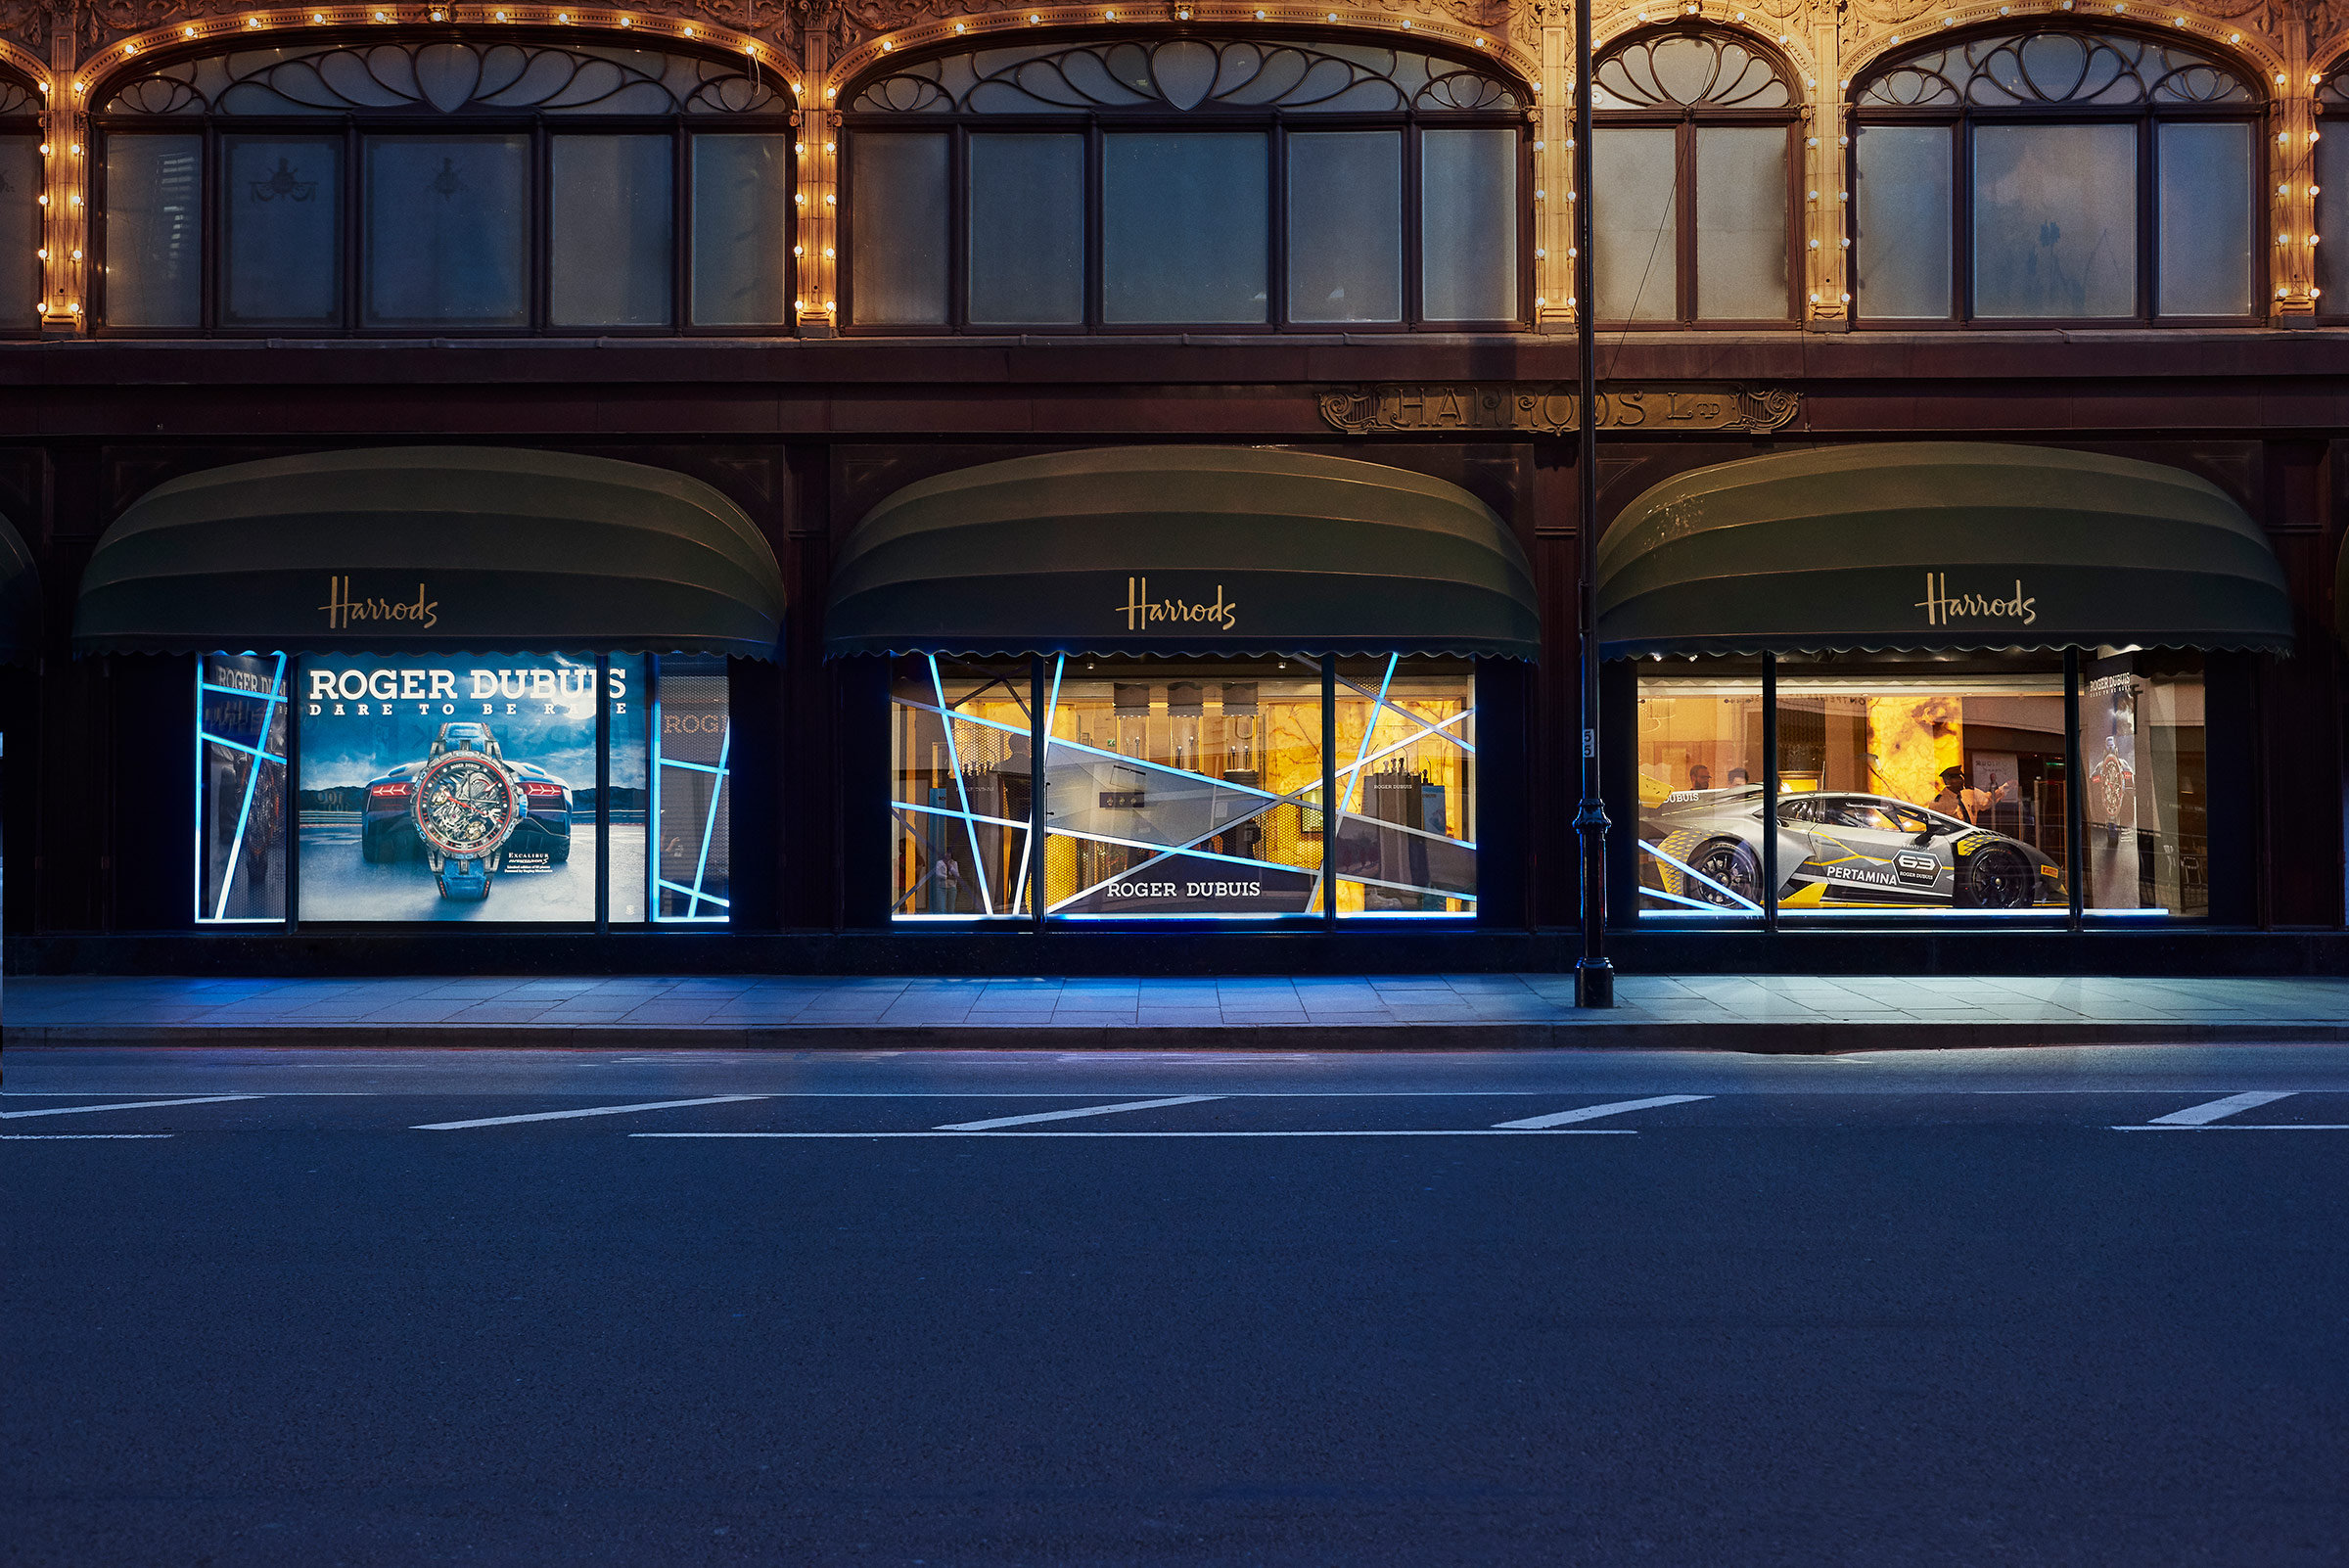 Roger Dubuis - Harrods Exhibition Windows